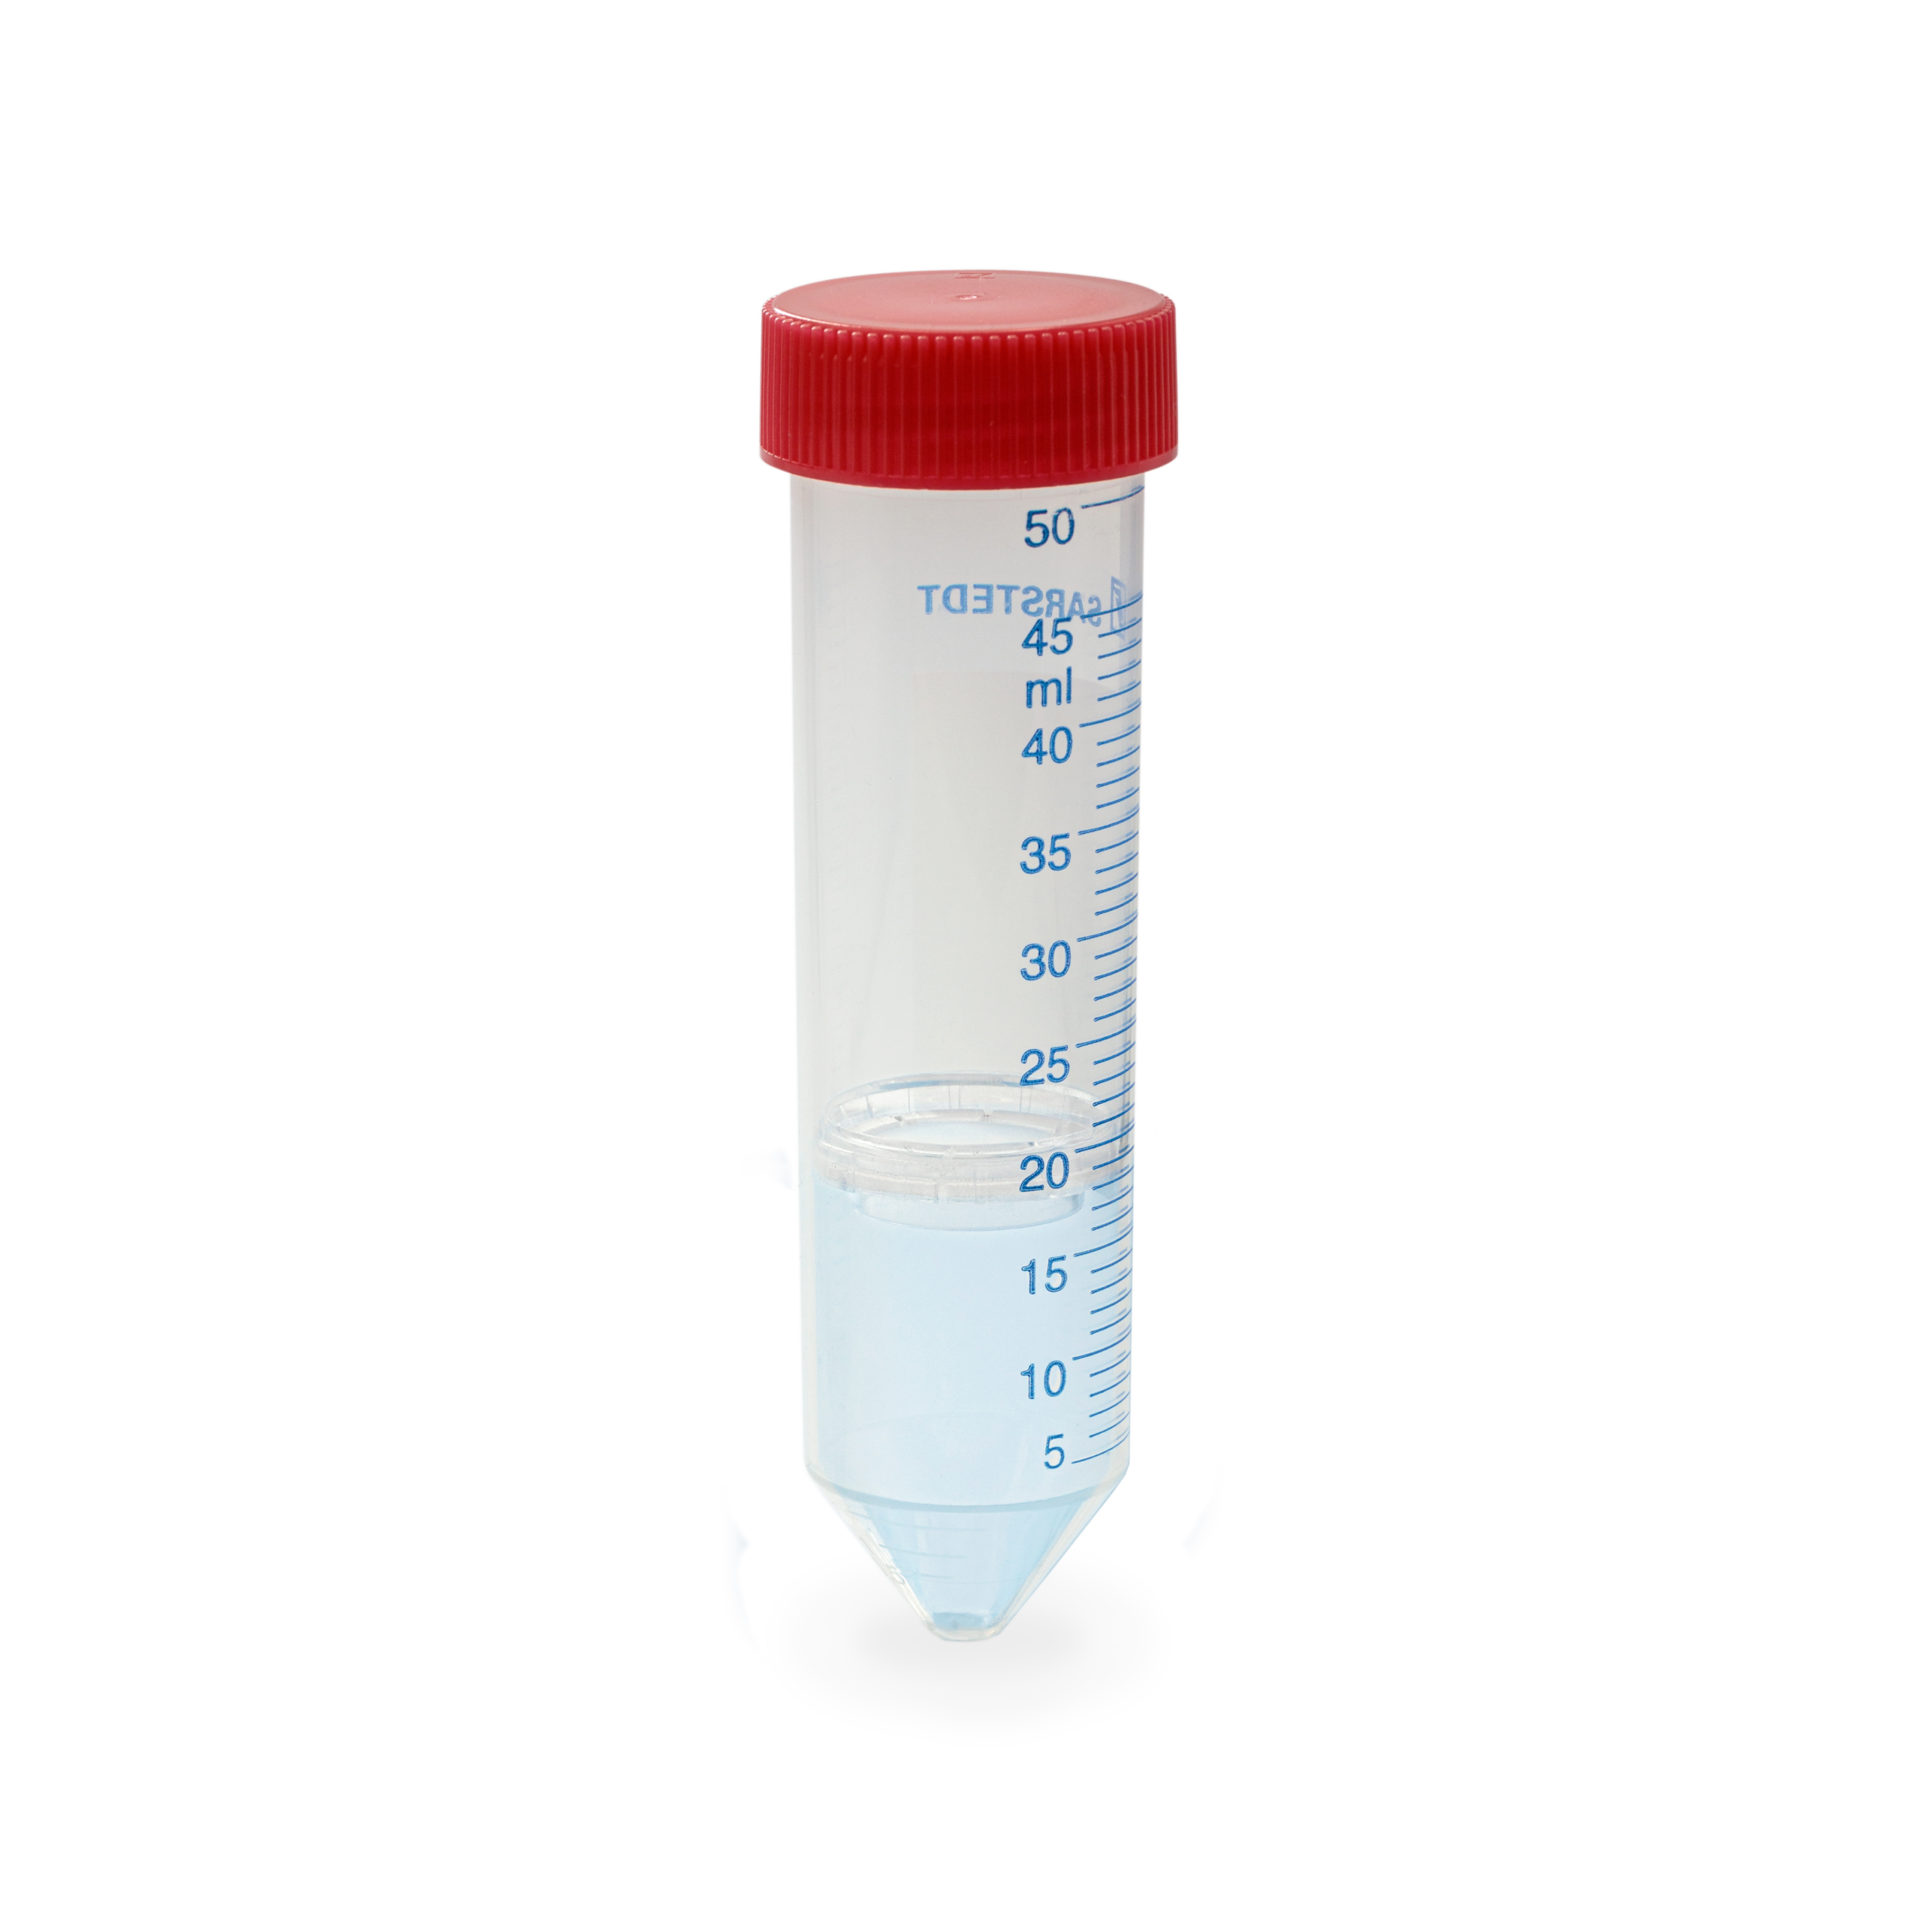 Plurimate 50 ml , sterile, prefilled Leuko Spin (1.092 g/ml)